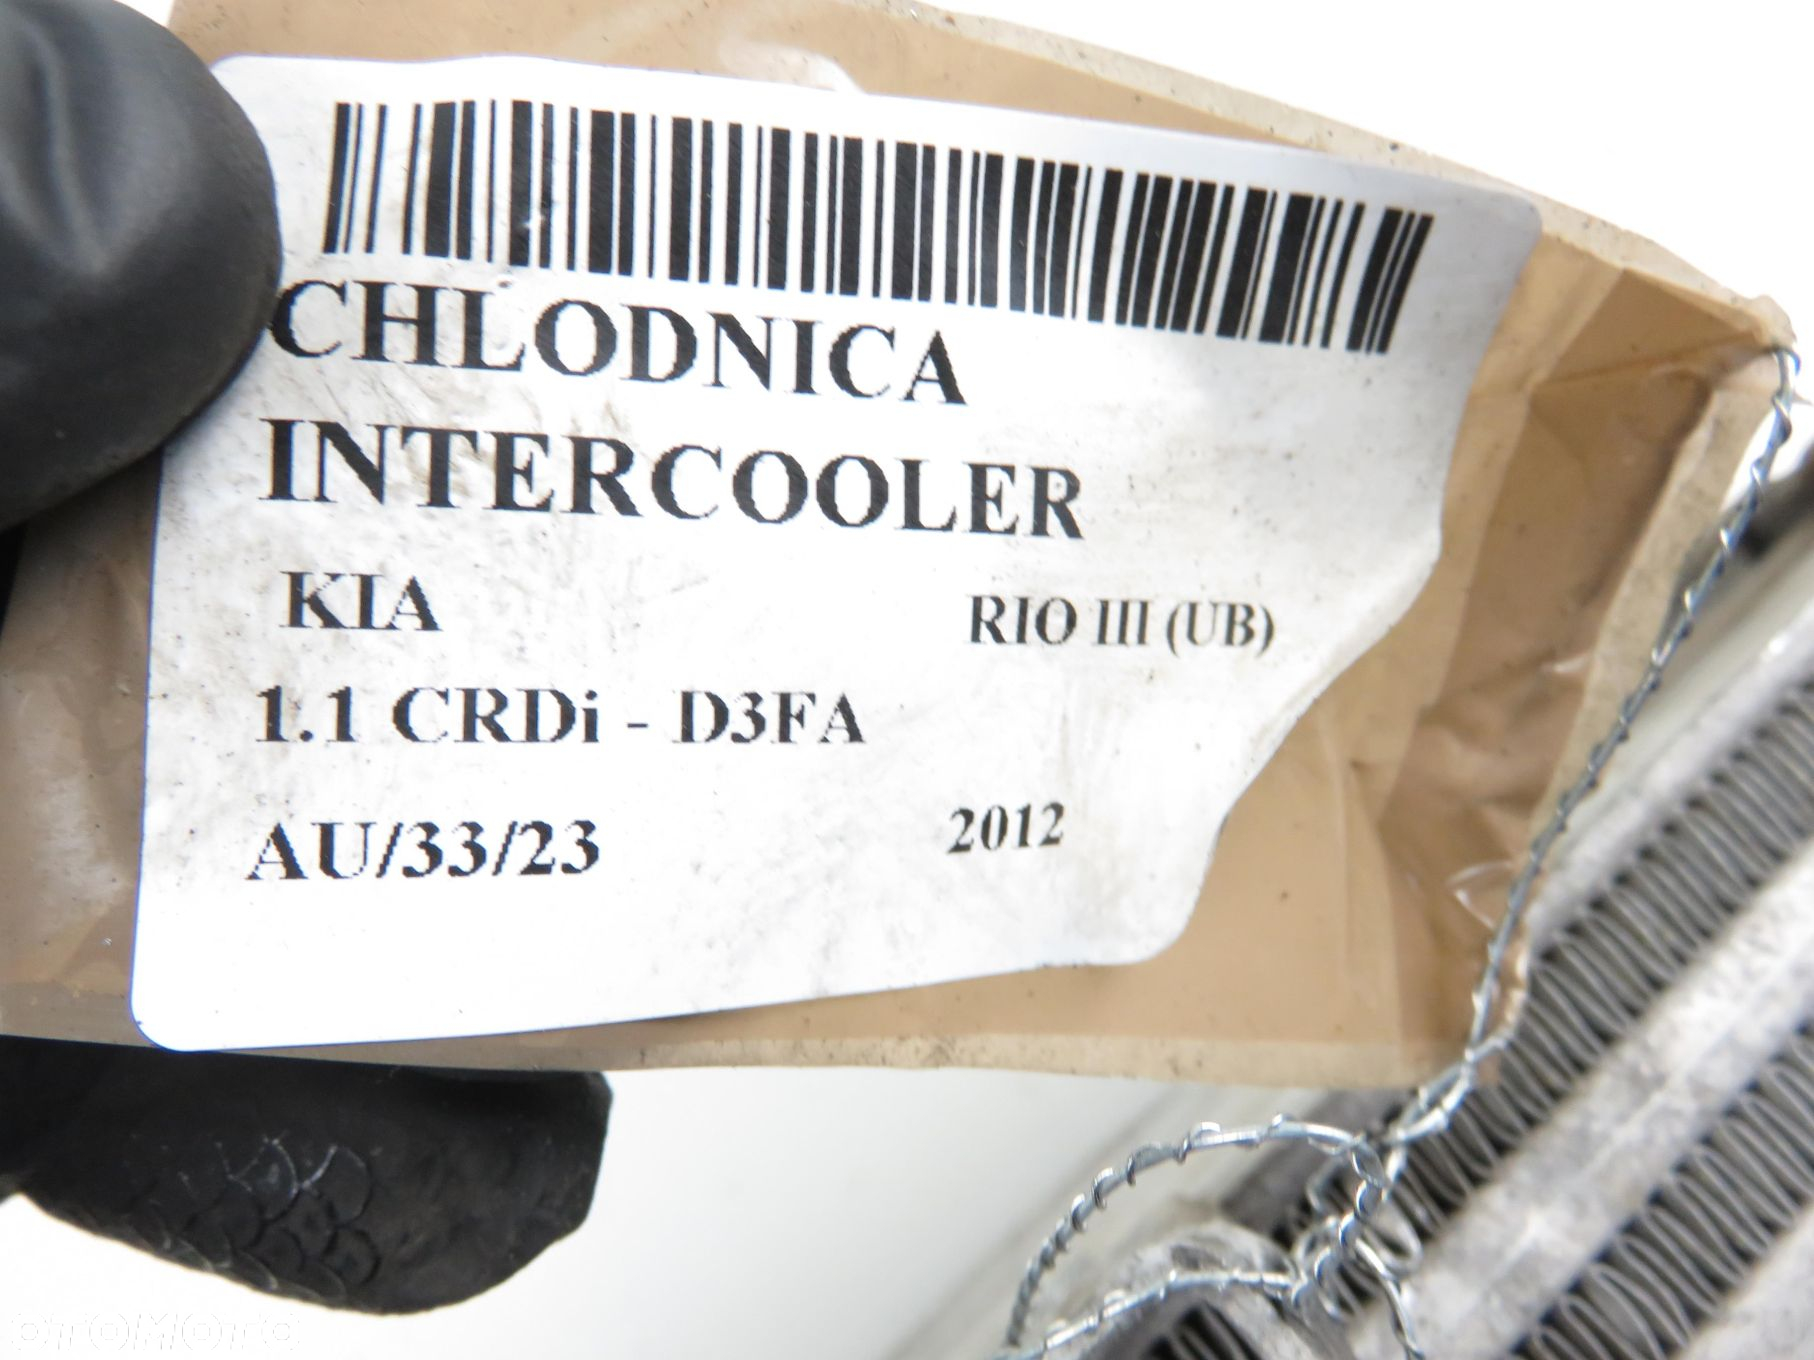 INTERCOOLER KIA RIO III 1.1 CRDi 282702A08X - 8